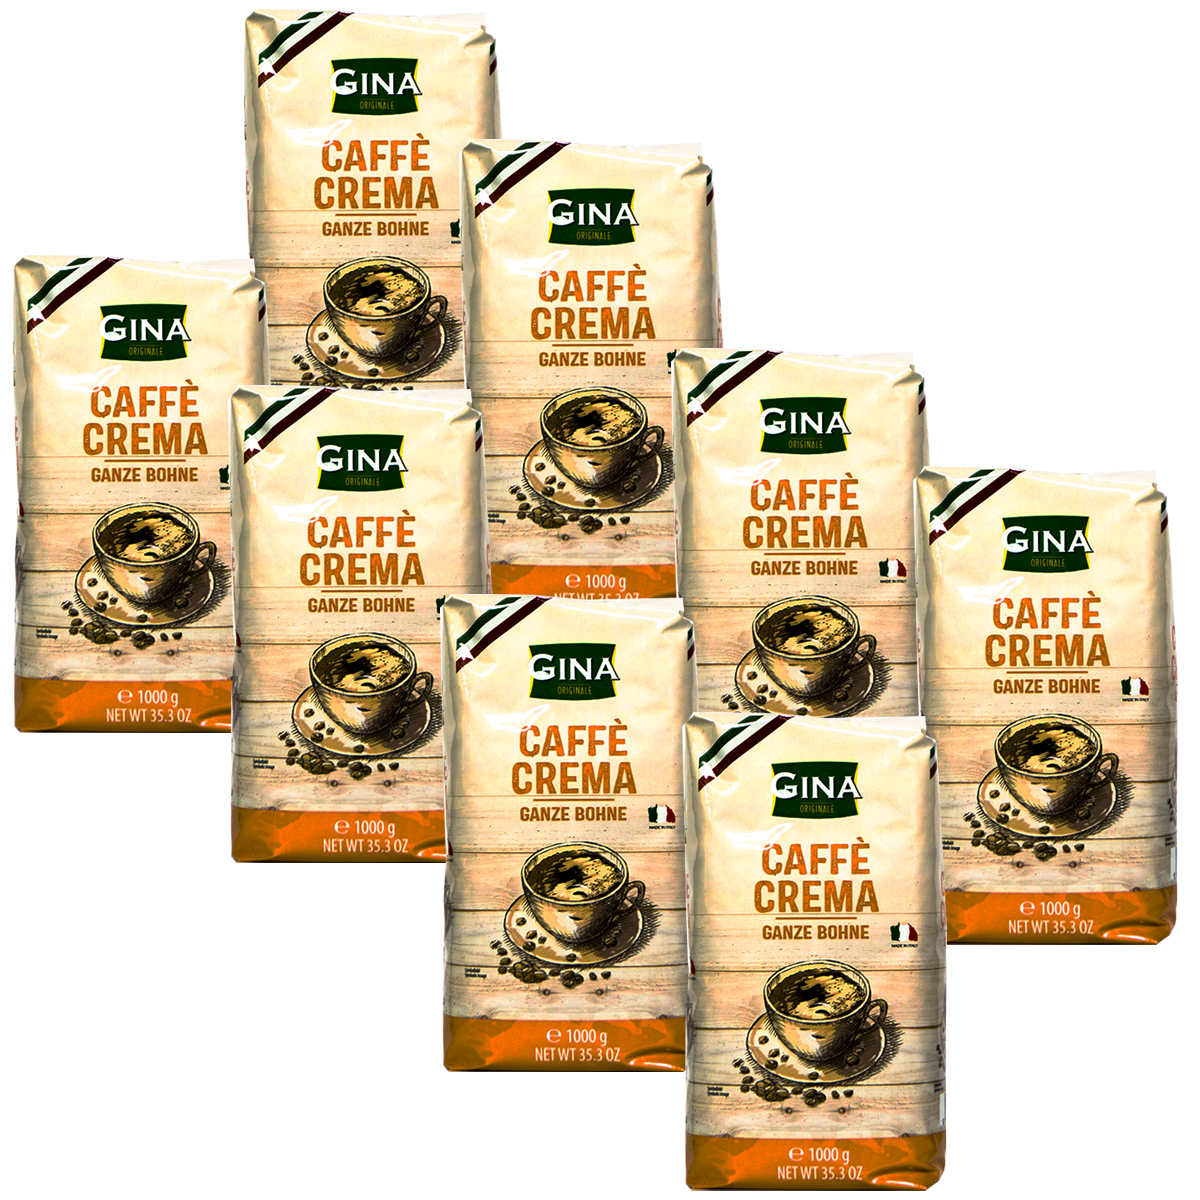 Gina caffè crema 8 kg koffiebonen